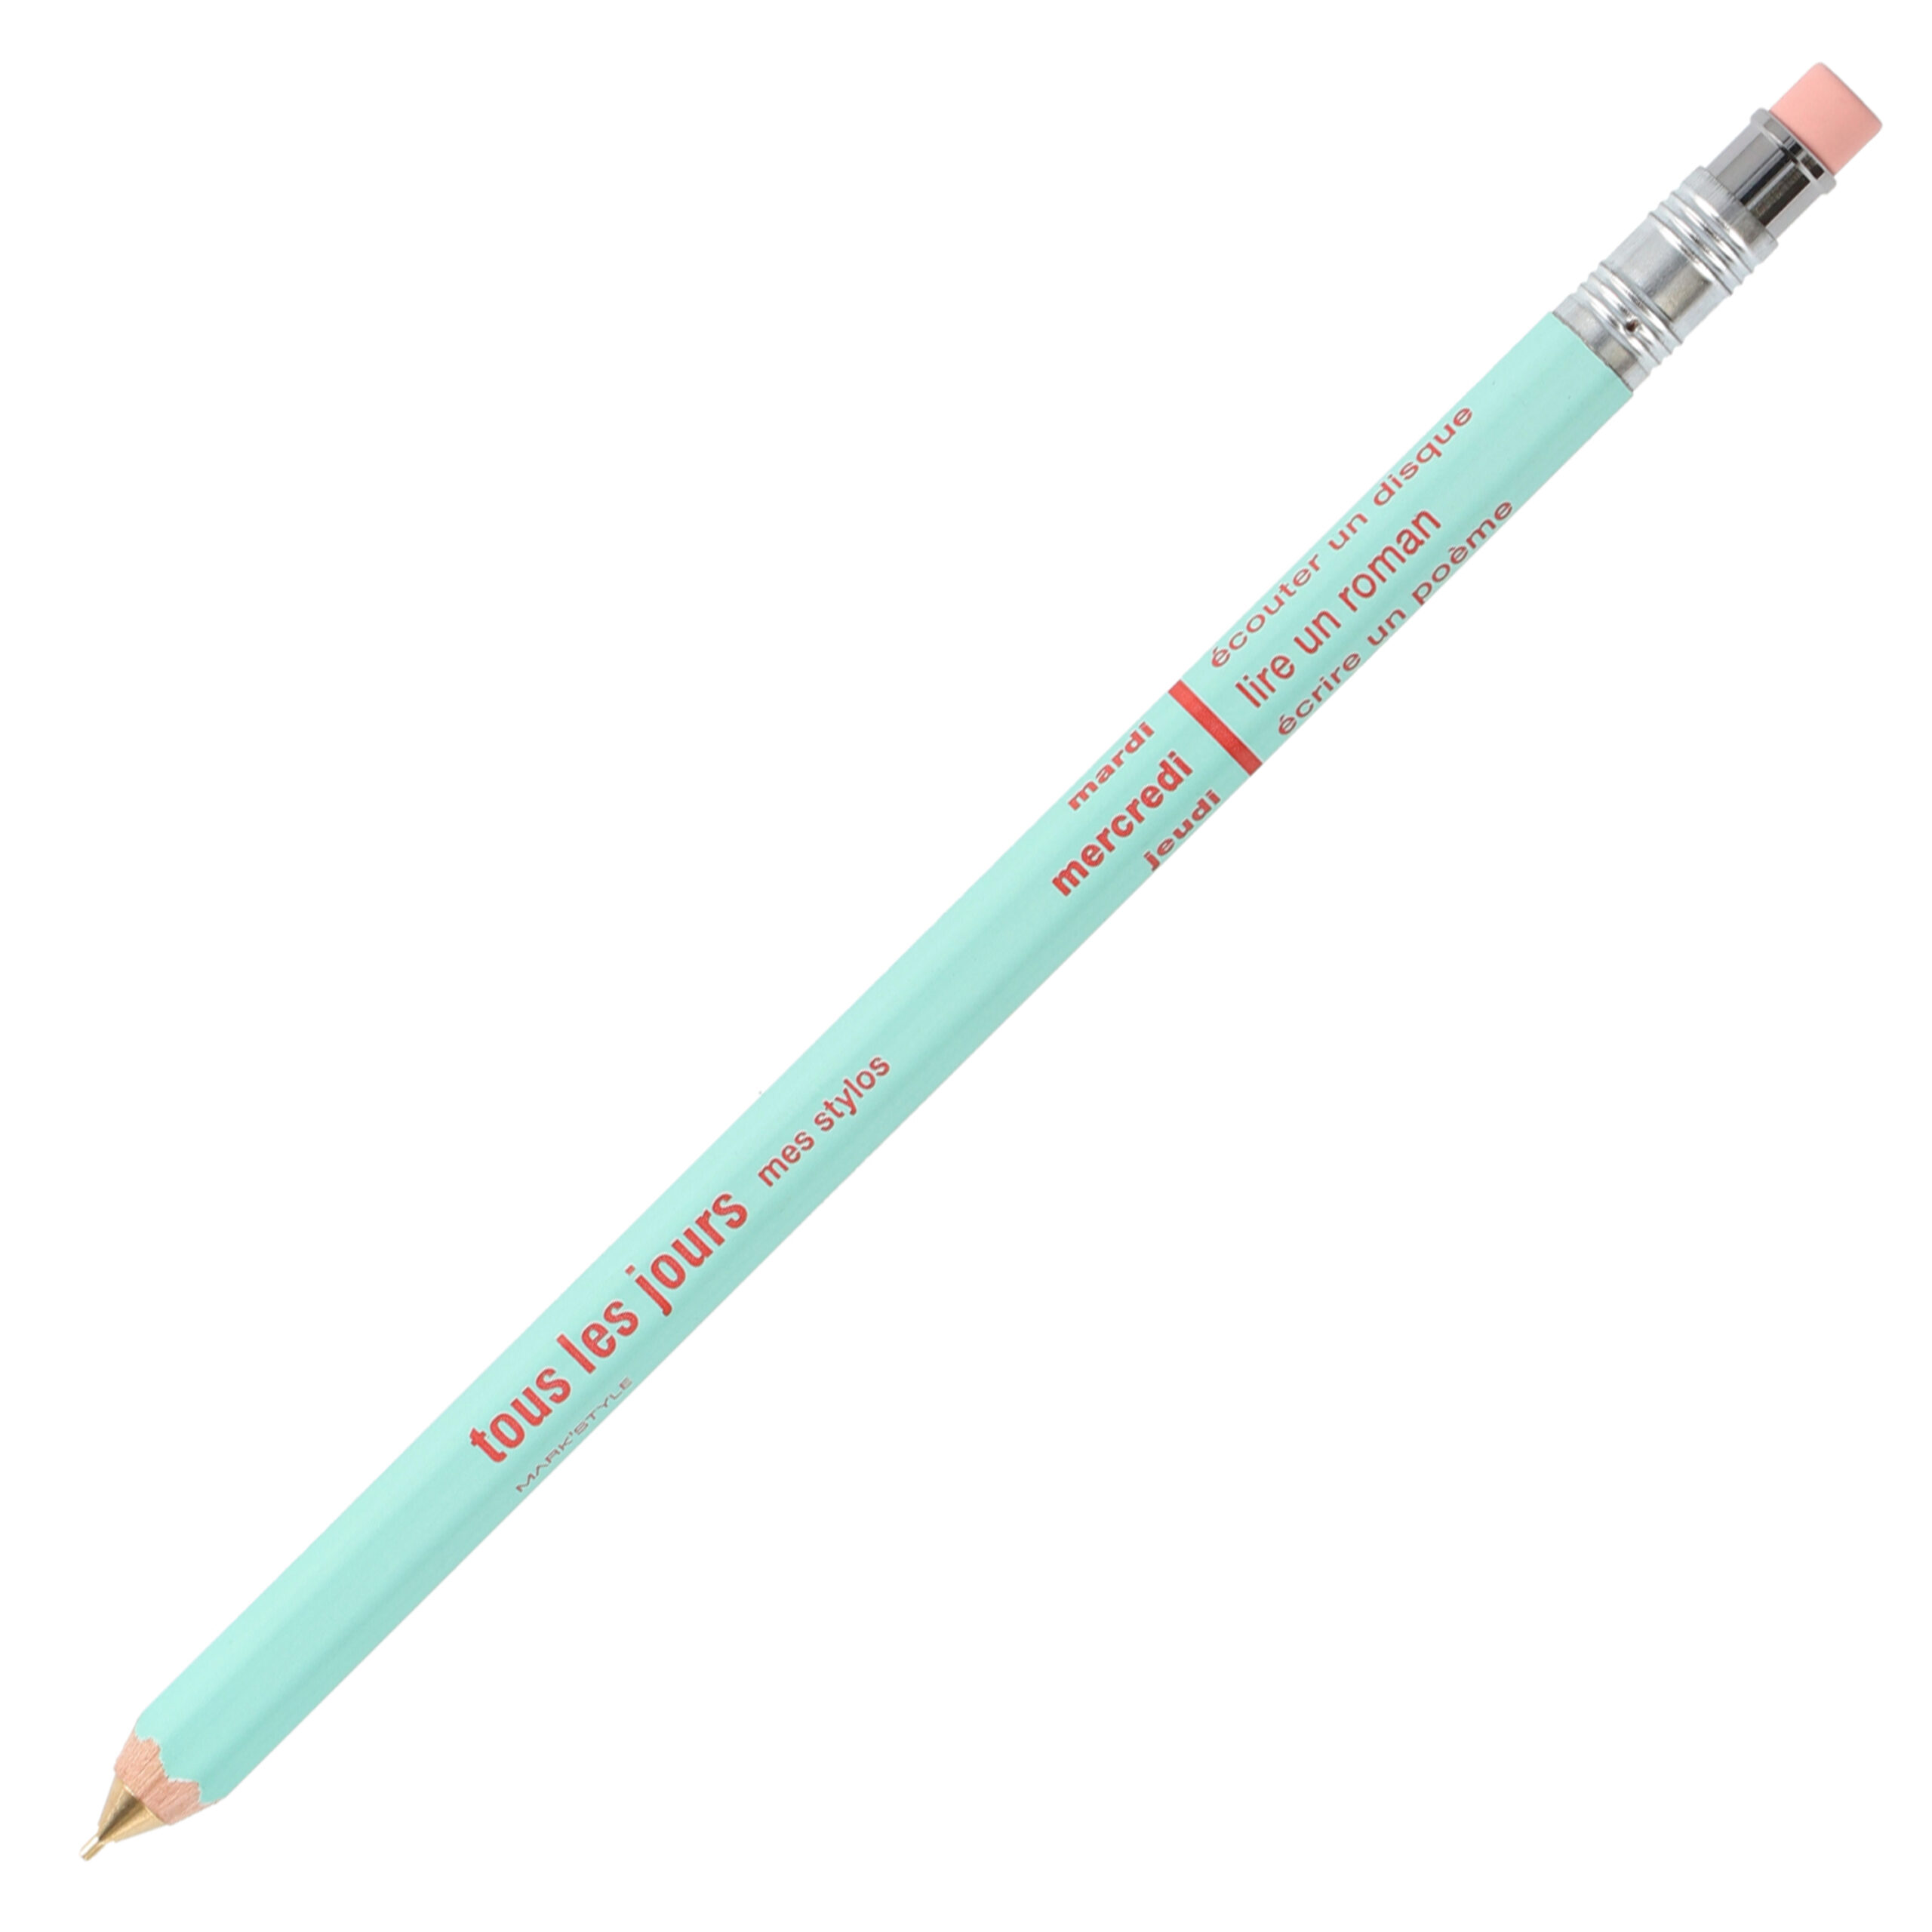 DAY-SH3-LMI - Light Mint - Mechanical Pencil with Eraser - MARK'STYLE - tous les jours